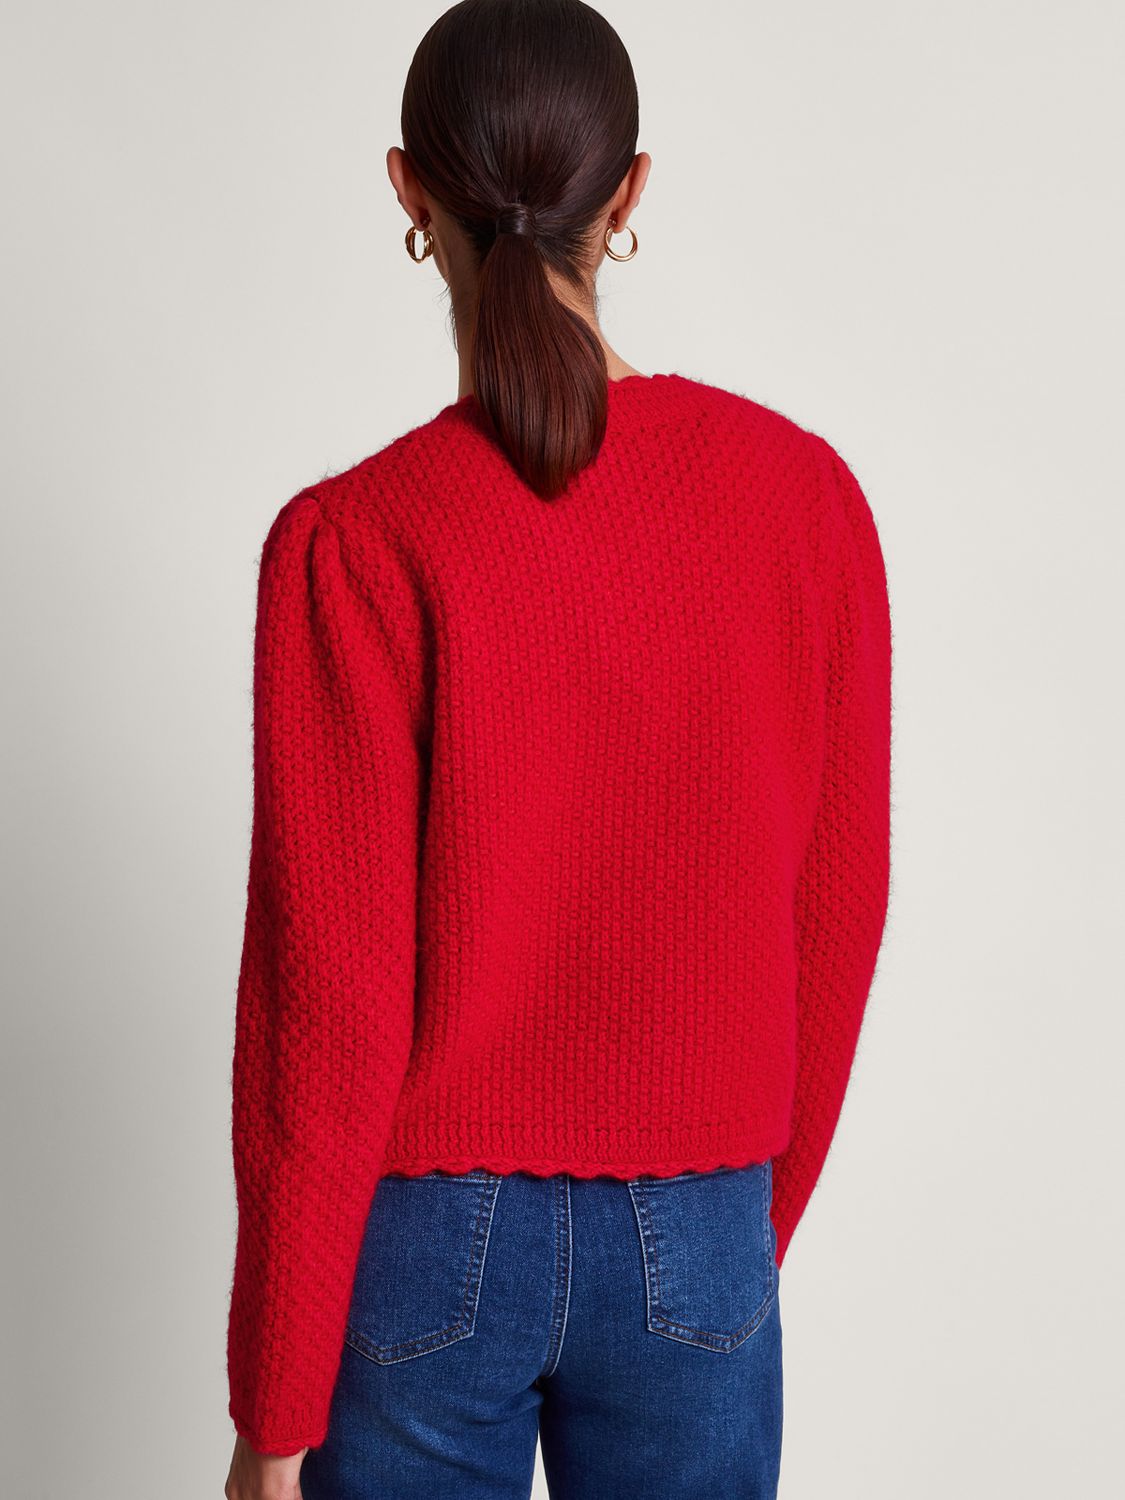 Monsoon Suki Stitch Knit Cardigan, Red at John Lewis & Partners